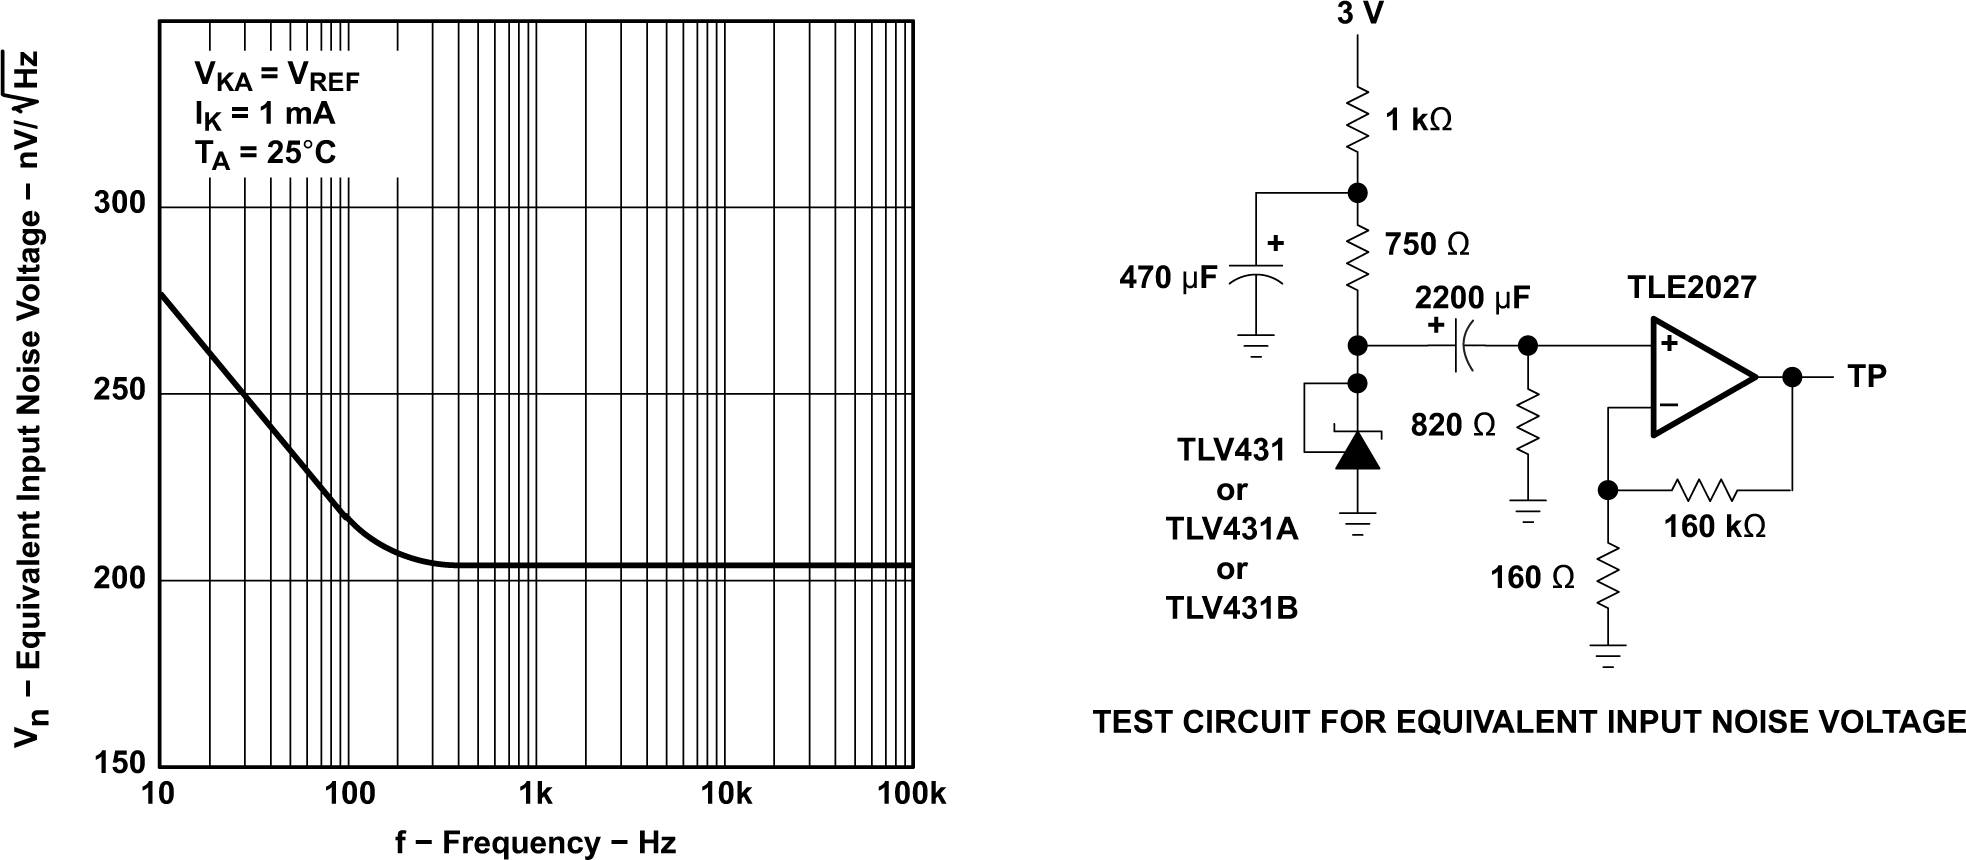 TLV431 TLV431A TLV431B Equivalent Input Noise
                        Voltage